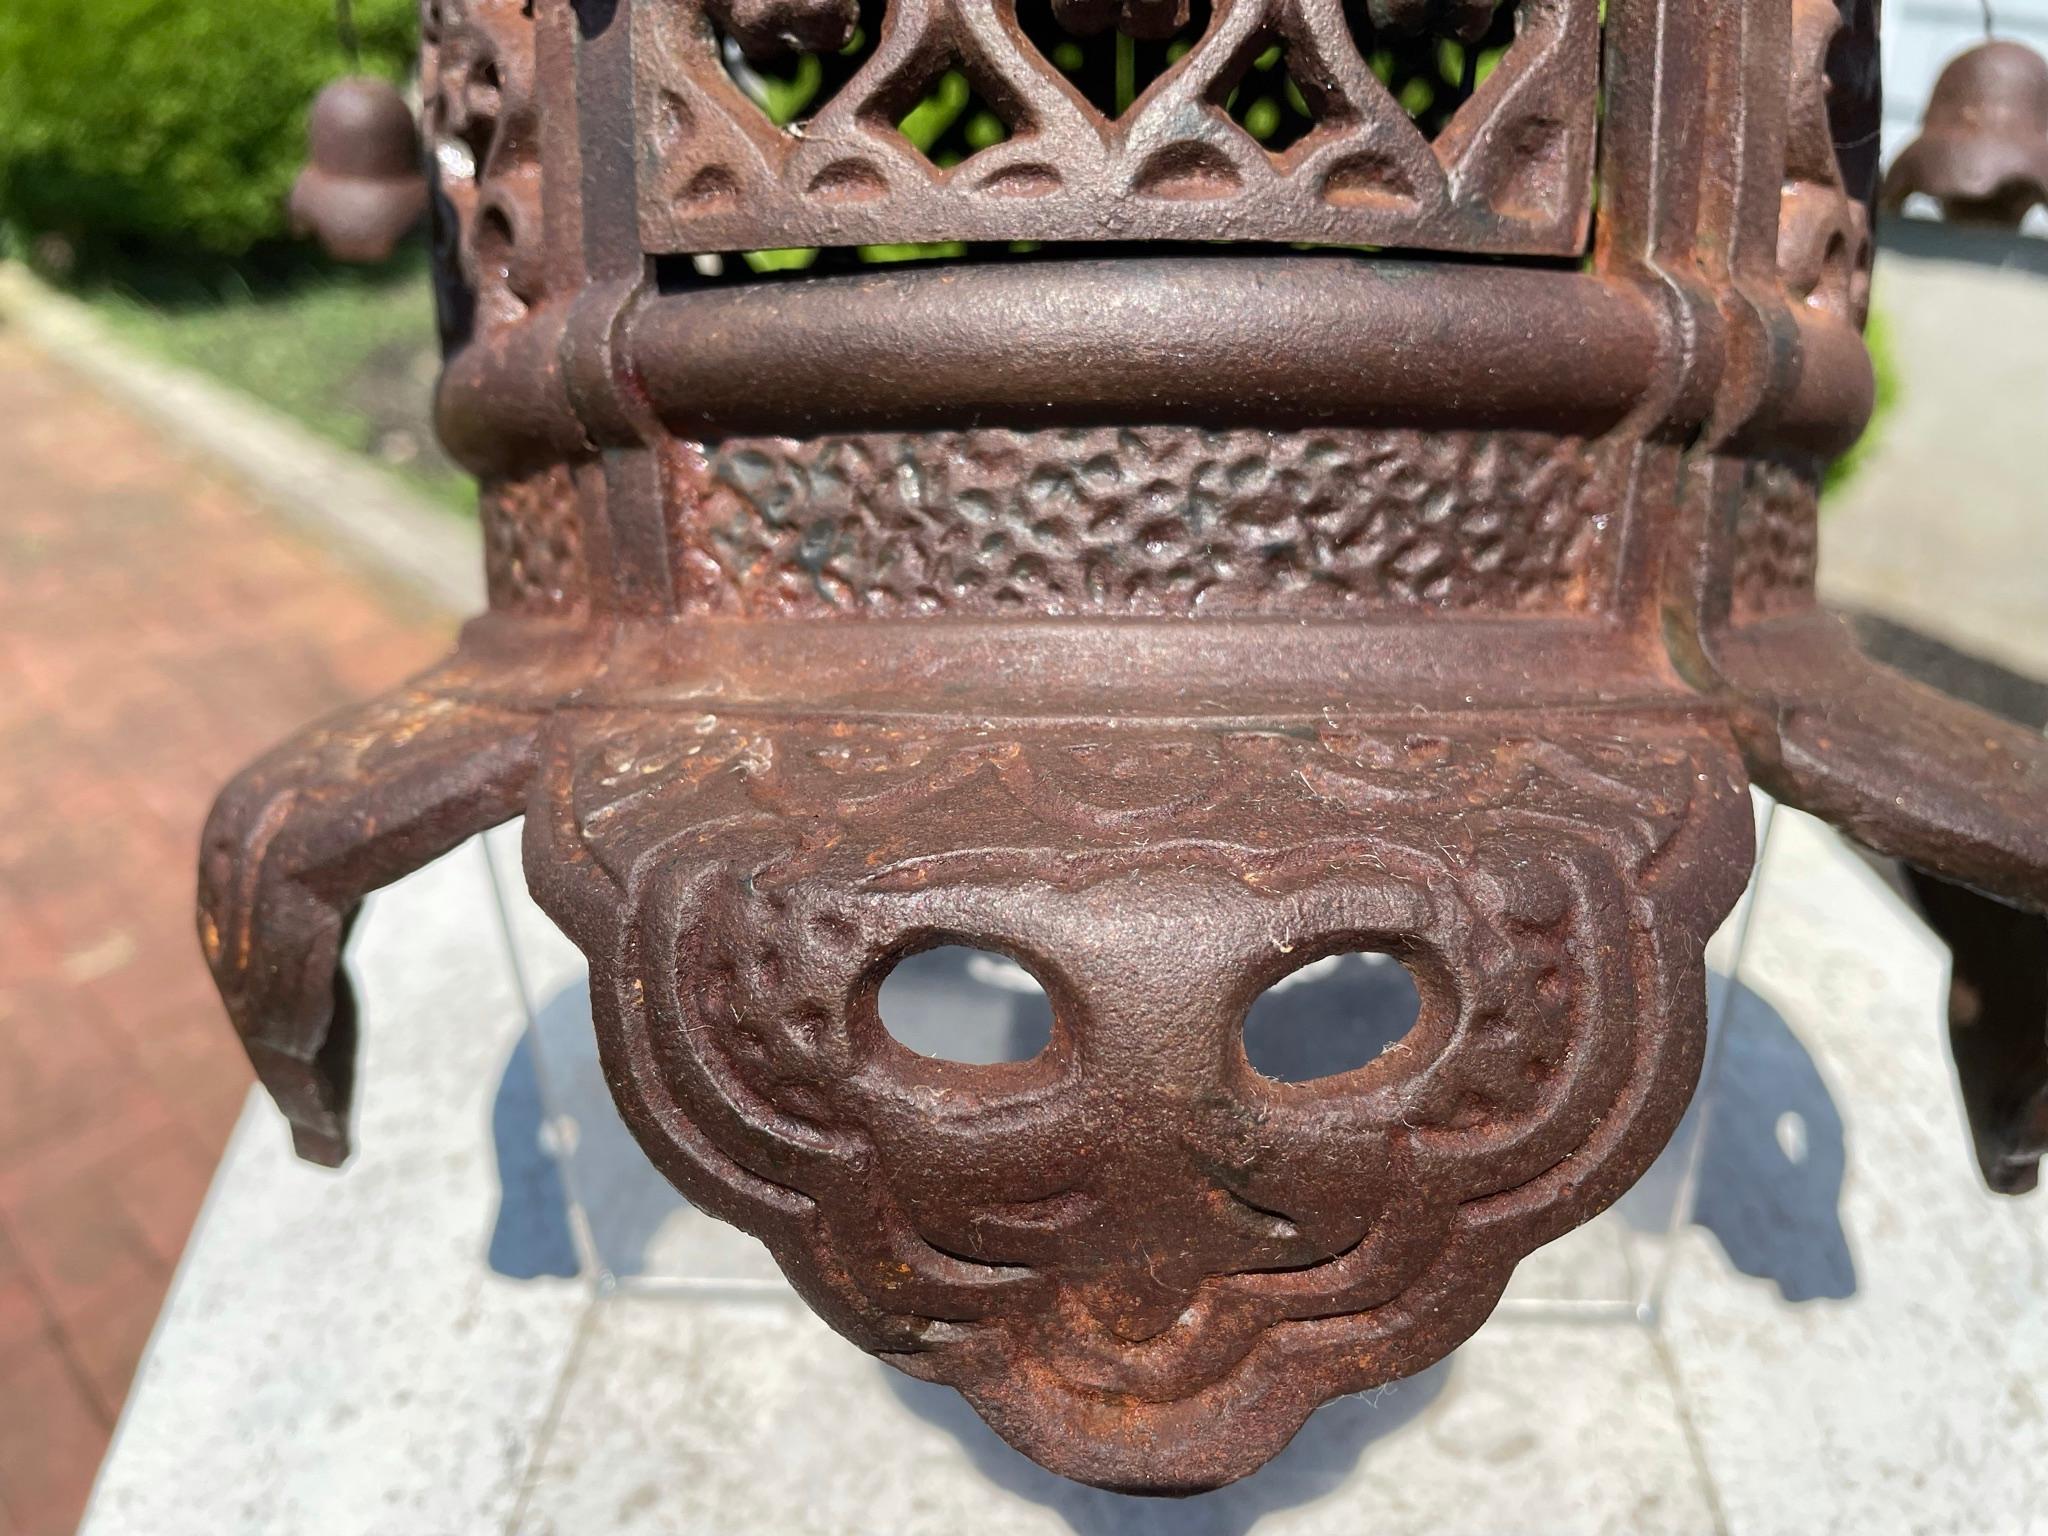 Cast Japan Antique Lantern with Bells and Exquisite Details